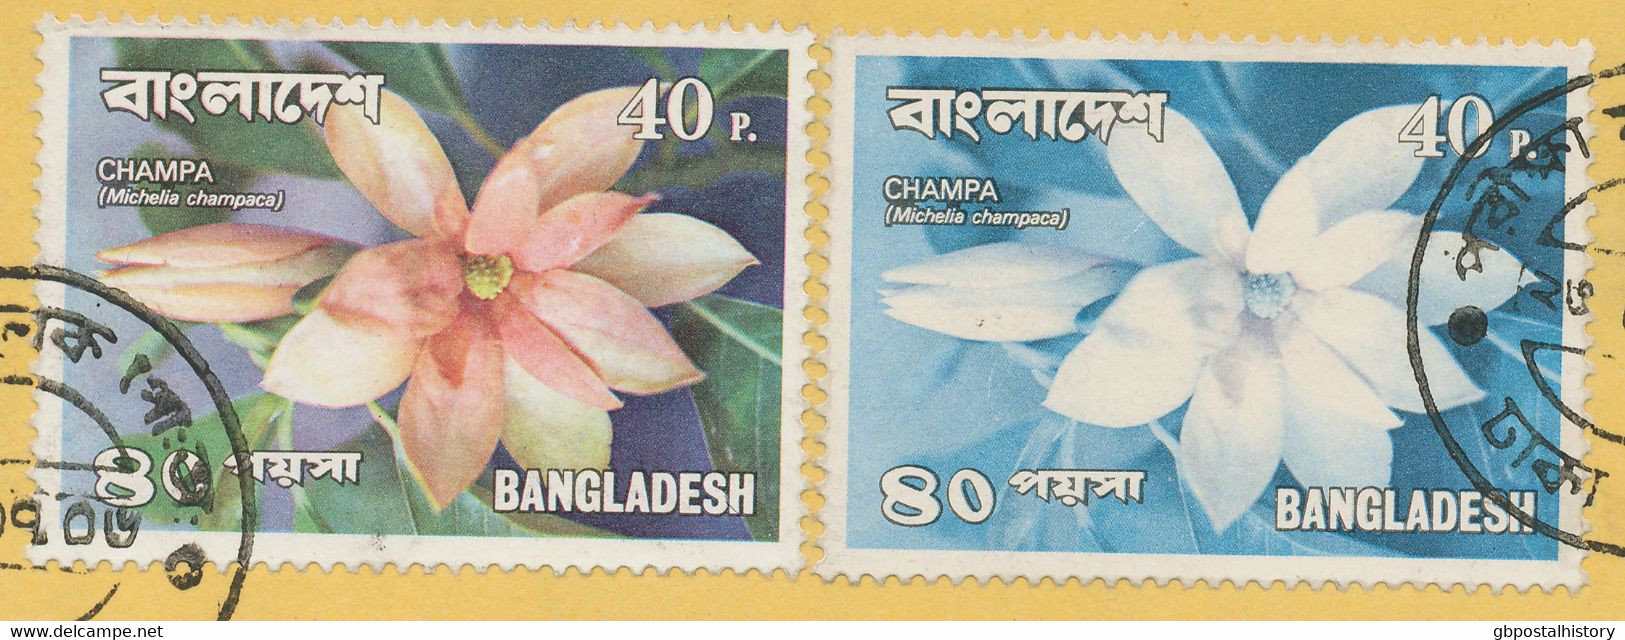 BANGLADESH 1978 Flowers 40P Multicolored Michelia Champaca (2x) MISSING COLOURS On Postal Stationery Envelope, RRR!! - Bangladesh